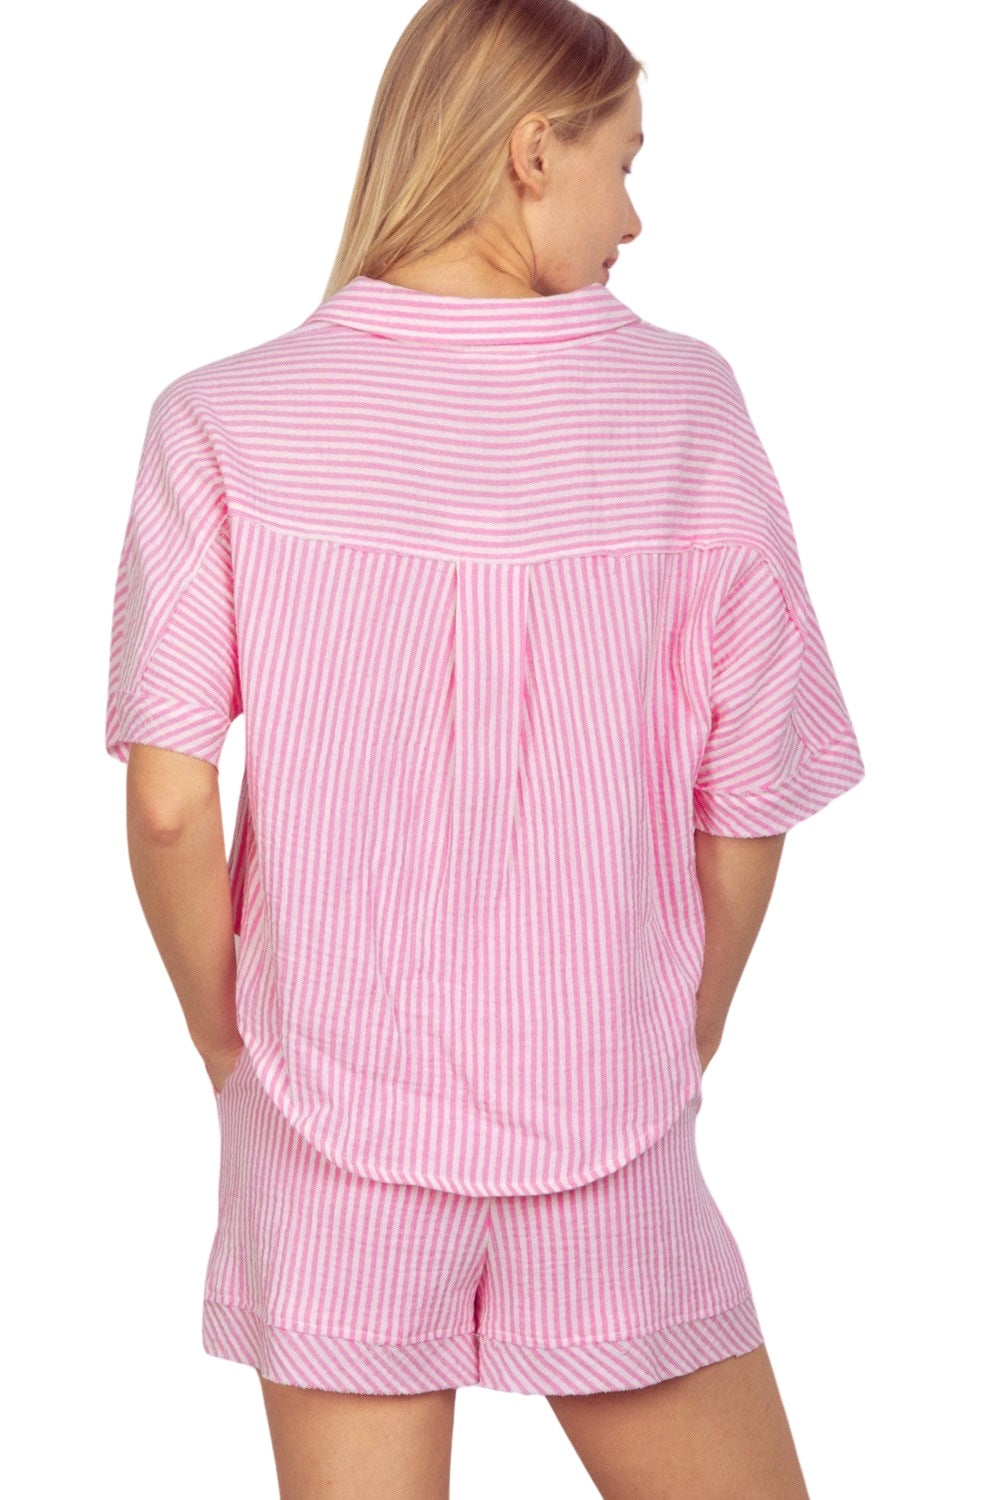 Beach Chic Pink & White Stripe Gauze Button Down Top